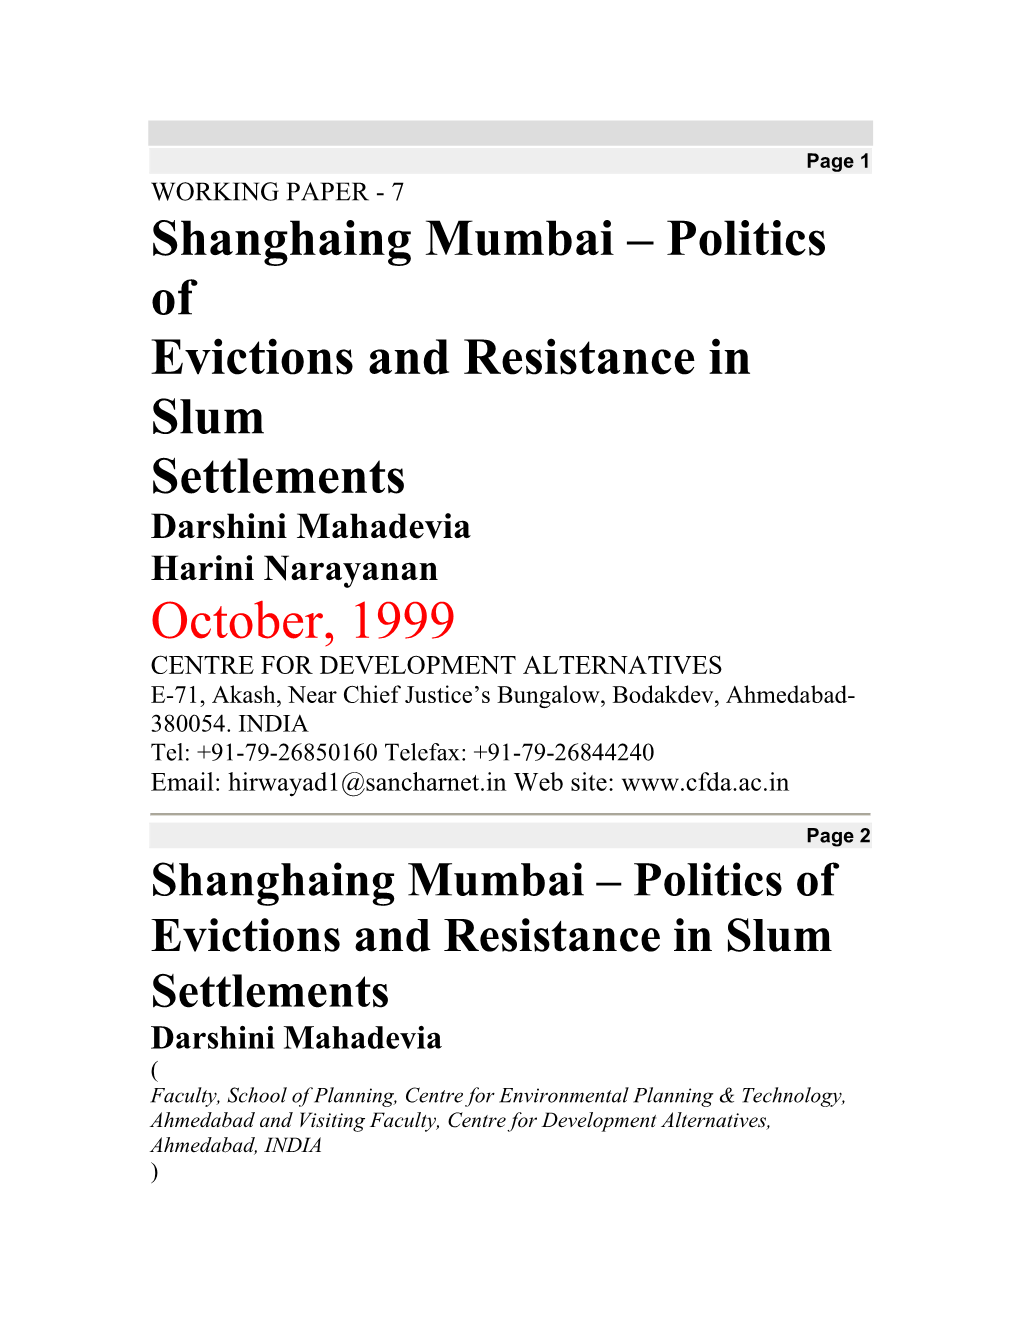 Shanghaing Mumbai – Politics of Evictions and Resistance in Slum